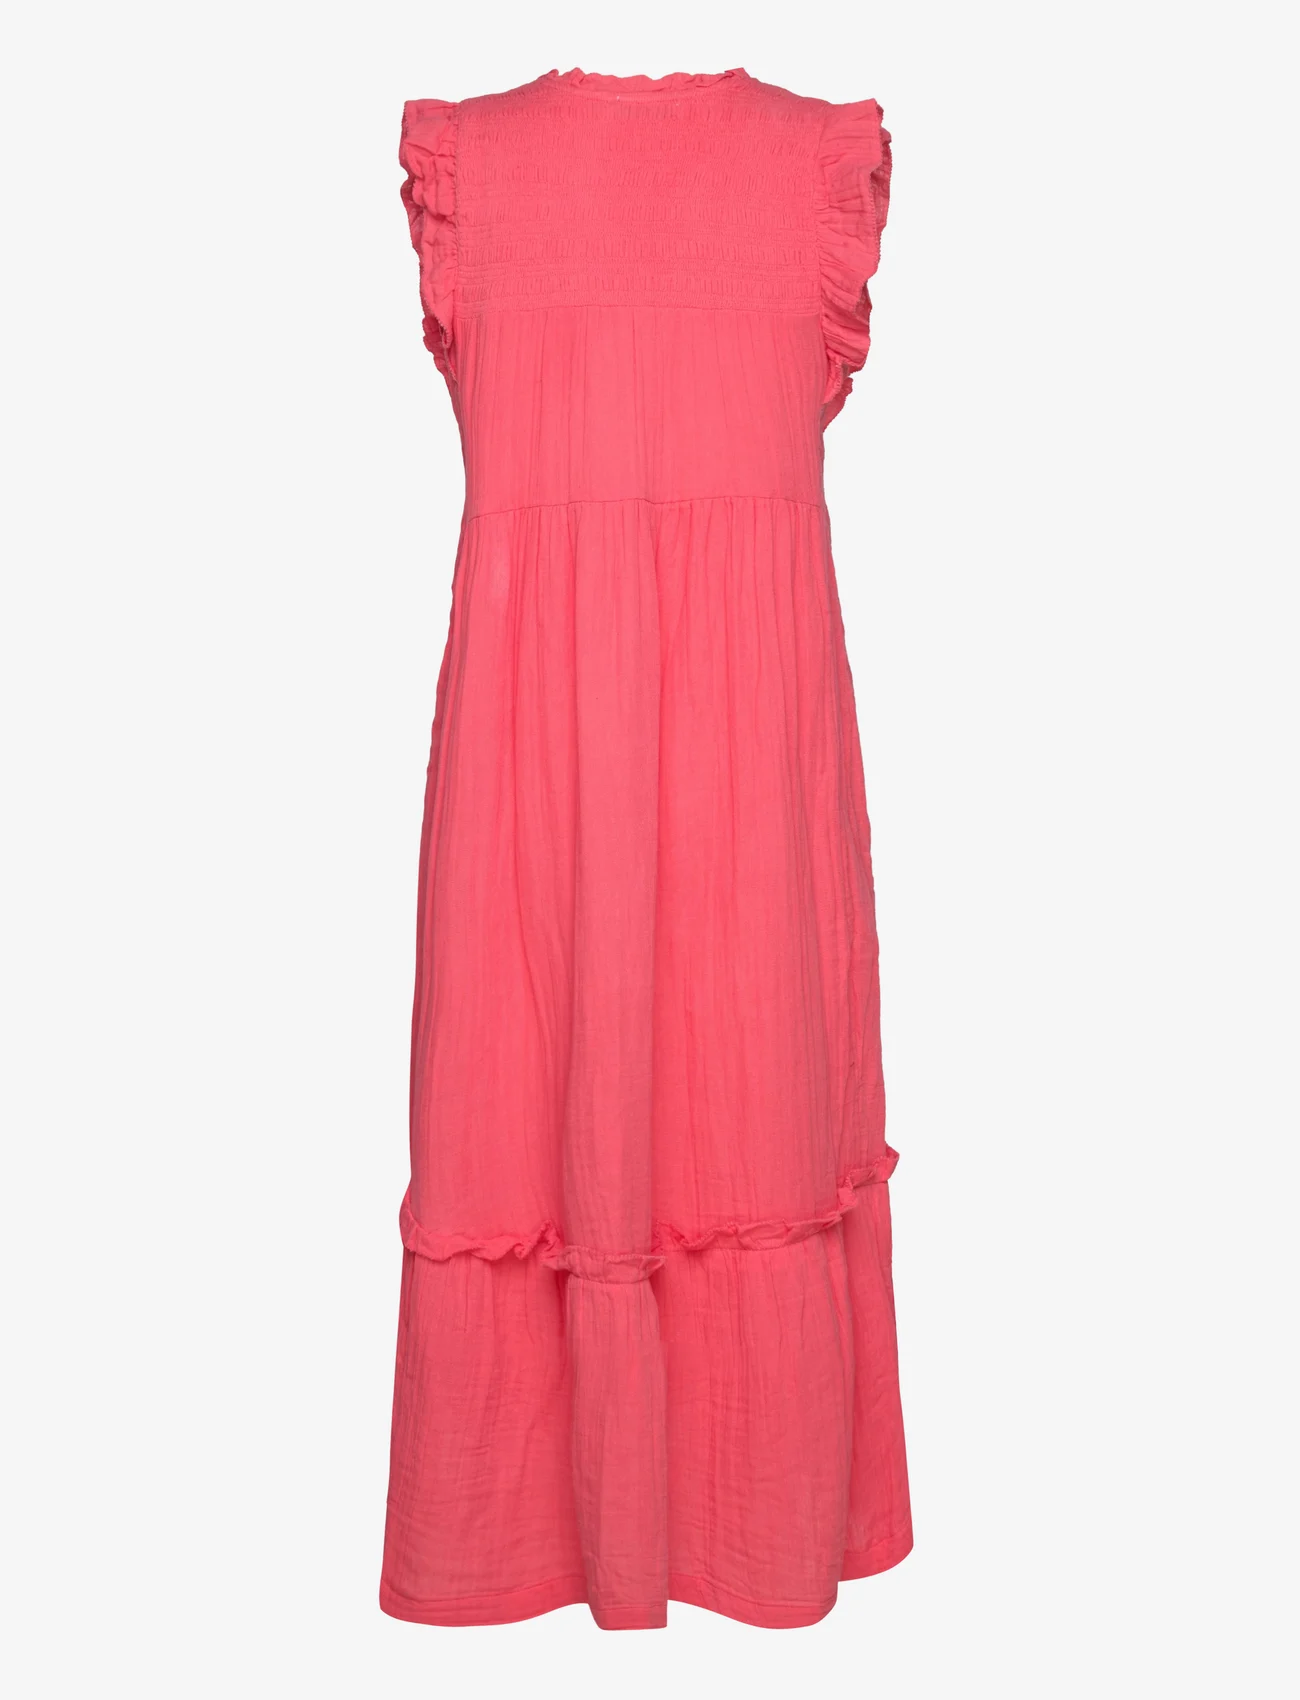 Coster Copenhagen - Long dress - odzież imprezowa w cenach outletowych - intense pink - 1